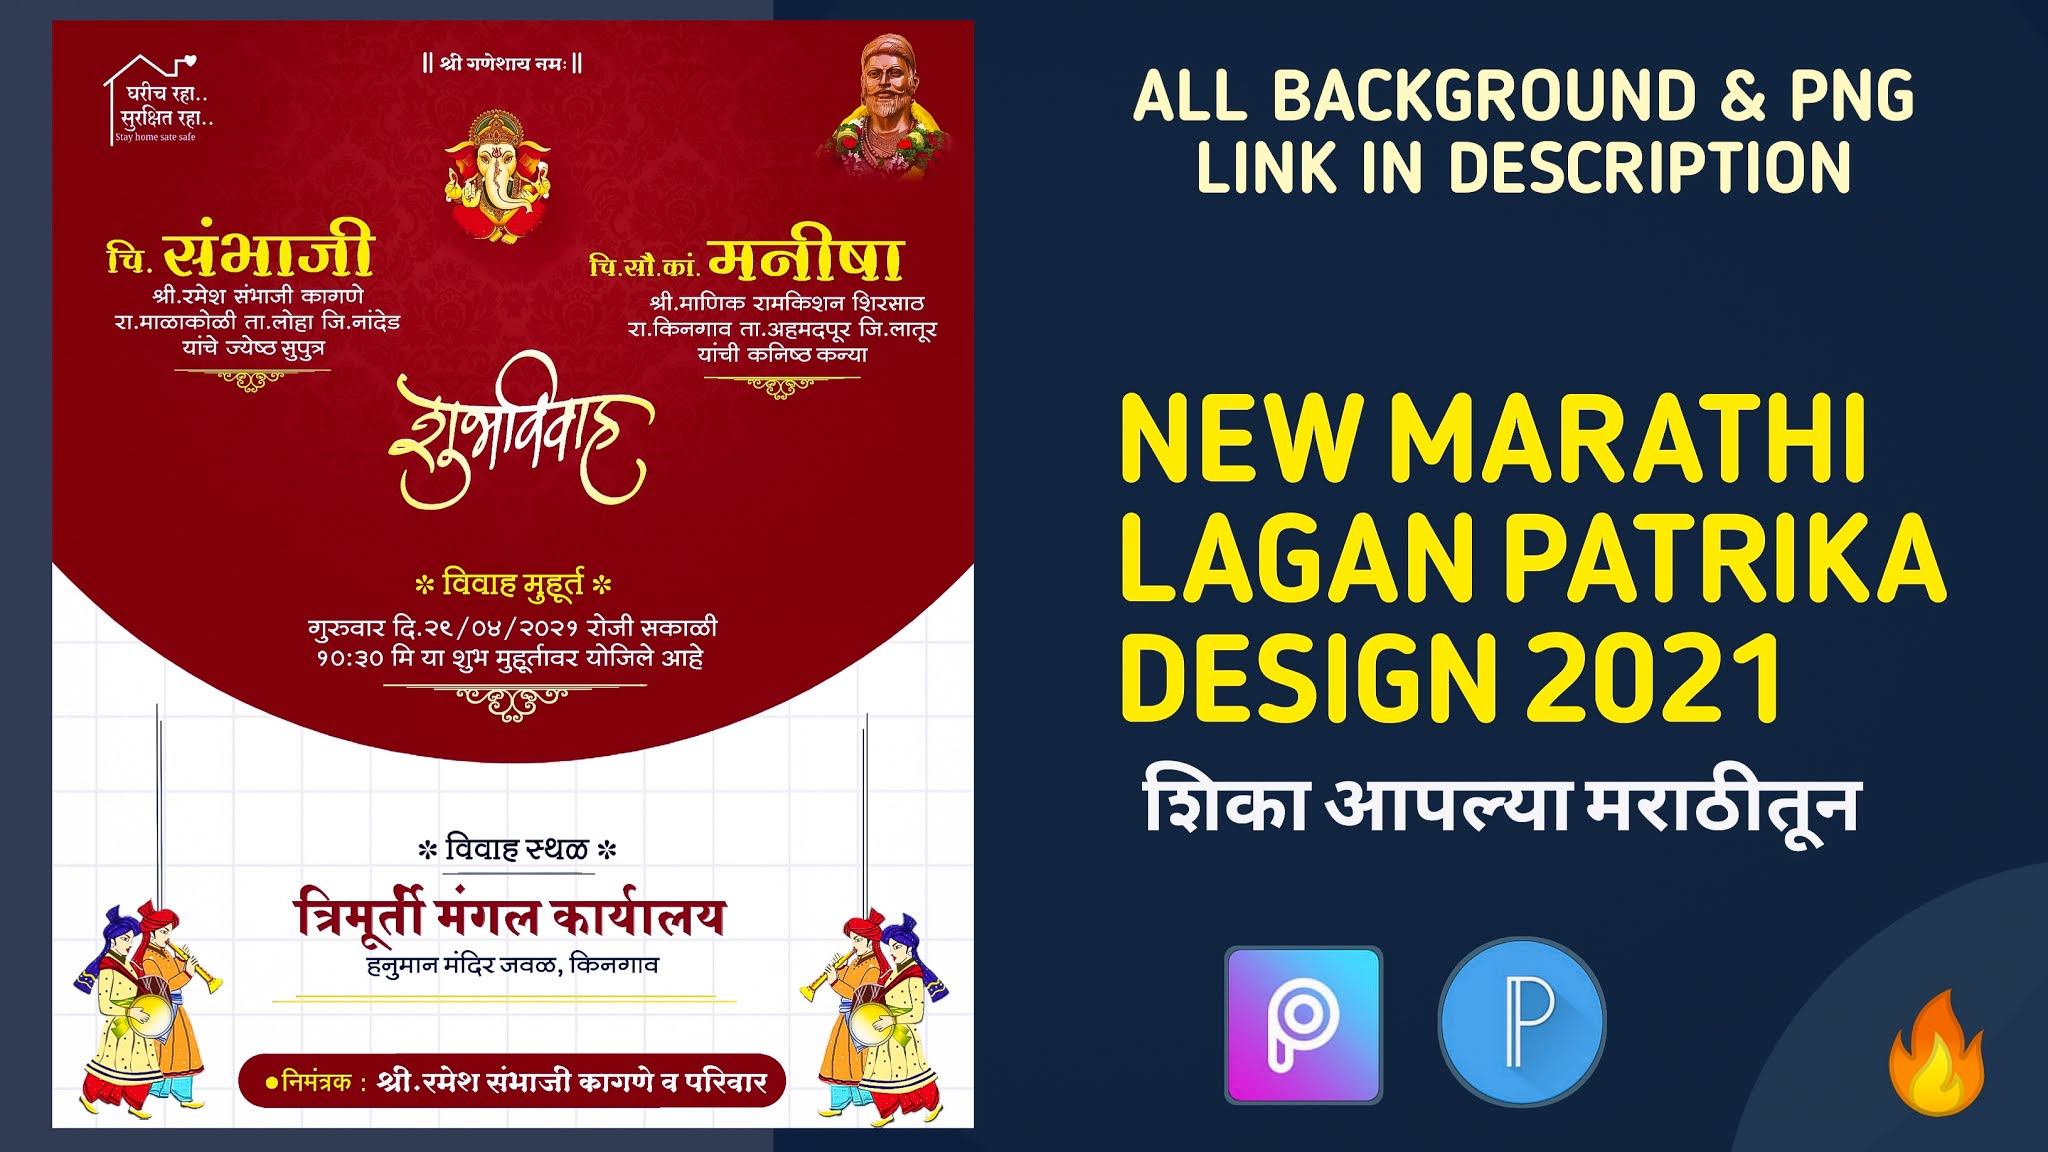 Lagna patrika editing | lagna patrika bannert editing picsart | lagna  patrika banner editing | #lagnapatrikaeditingmaterial,